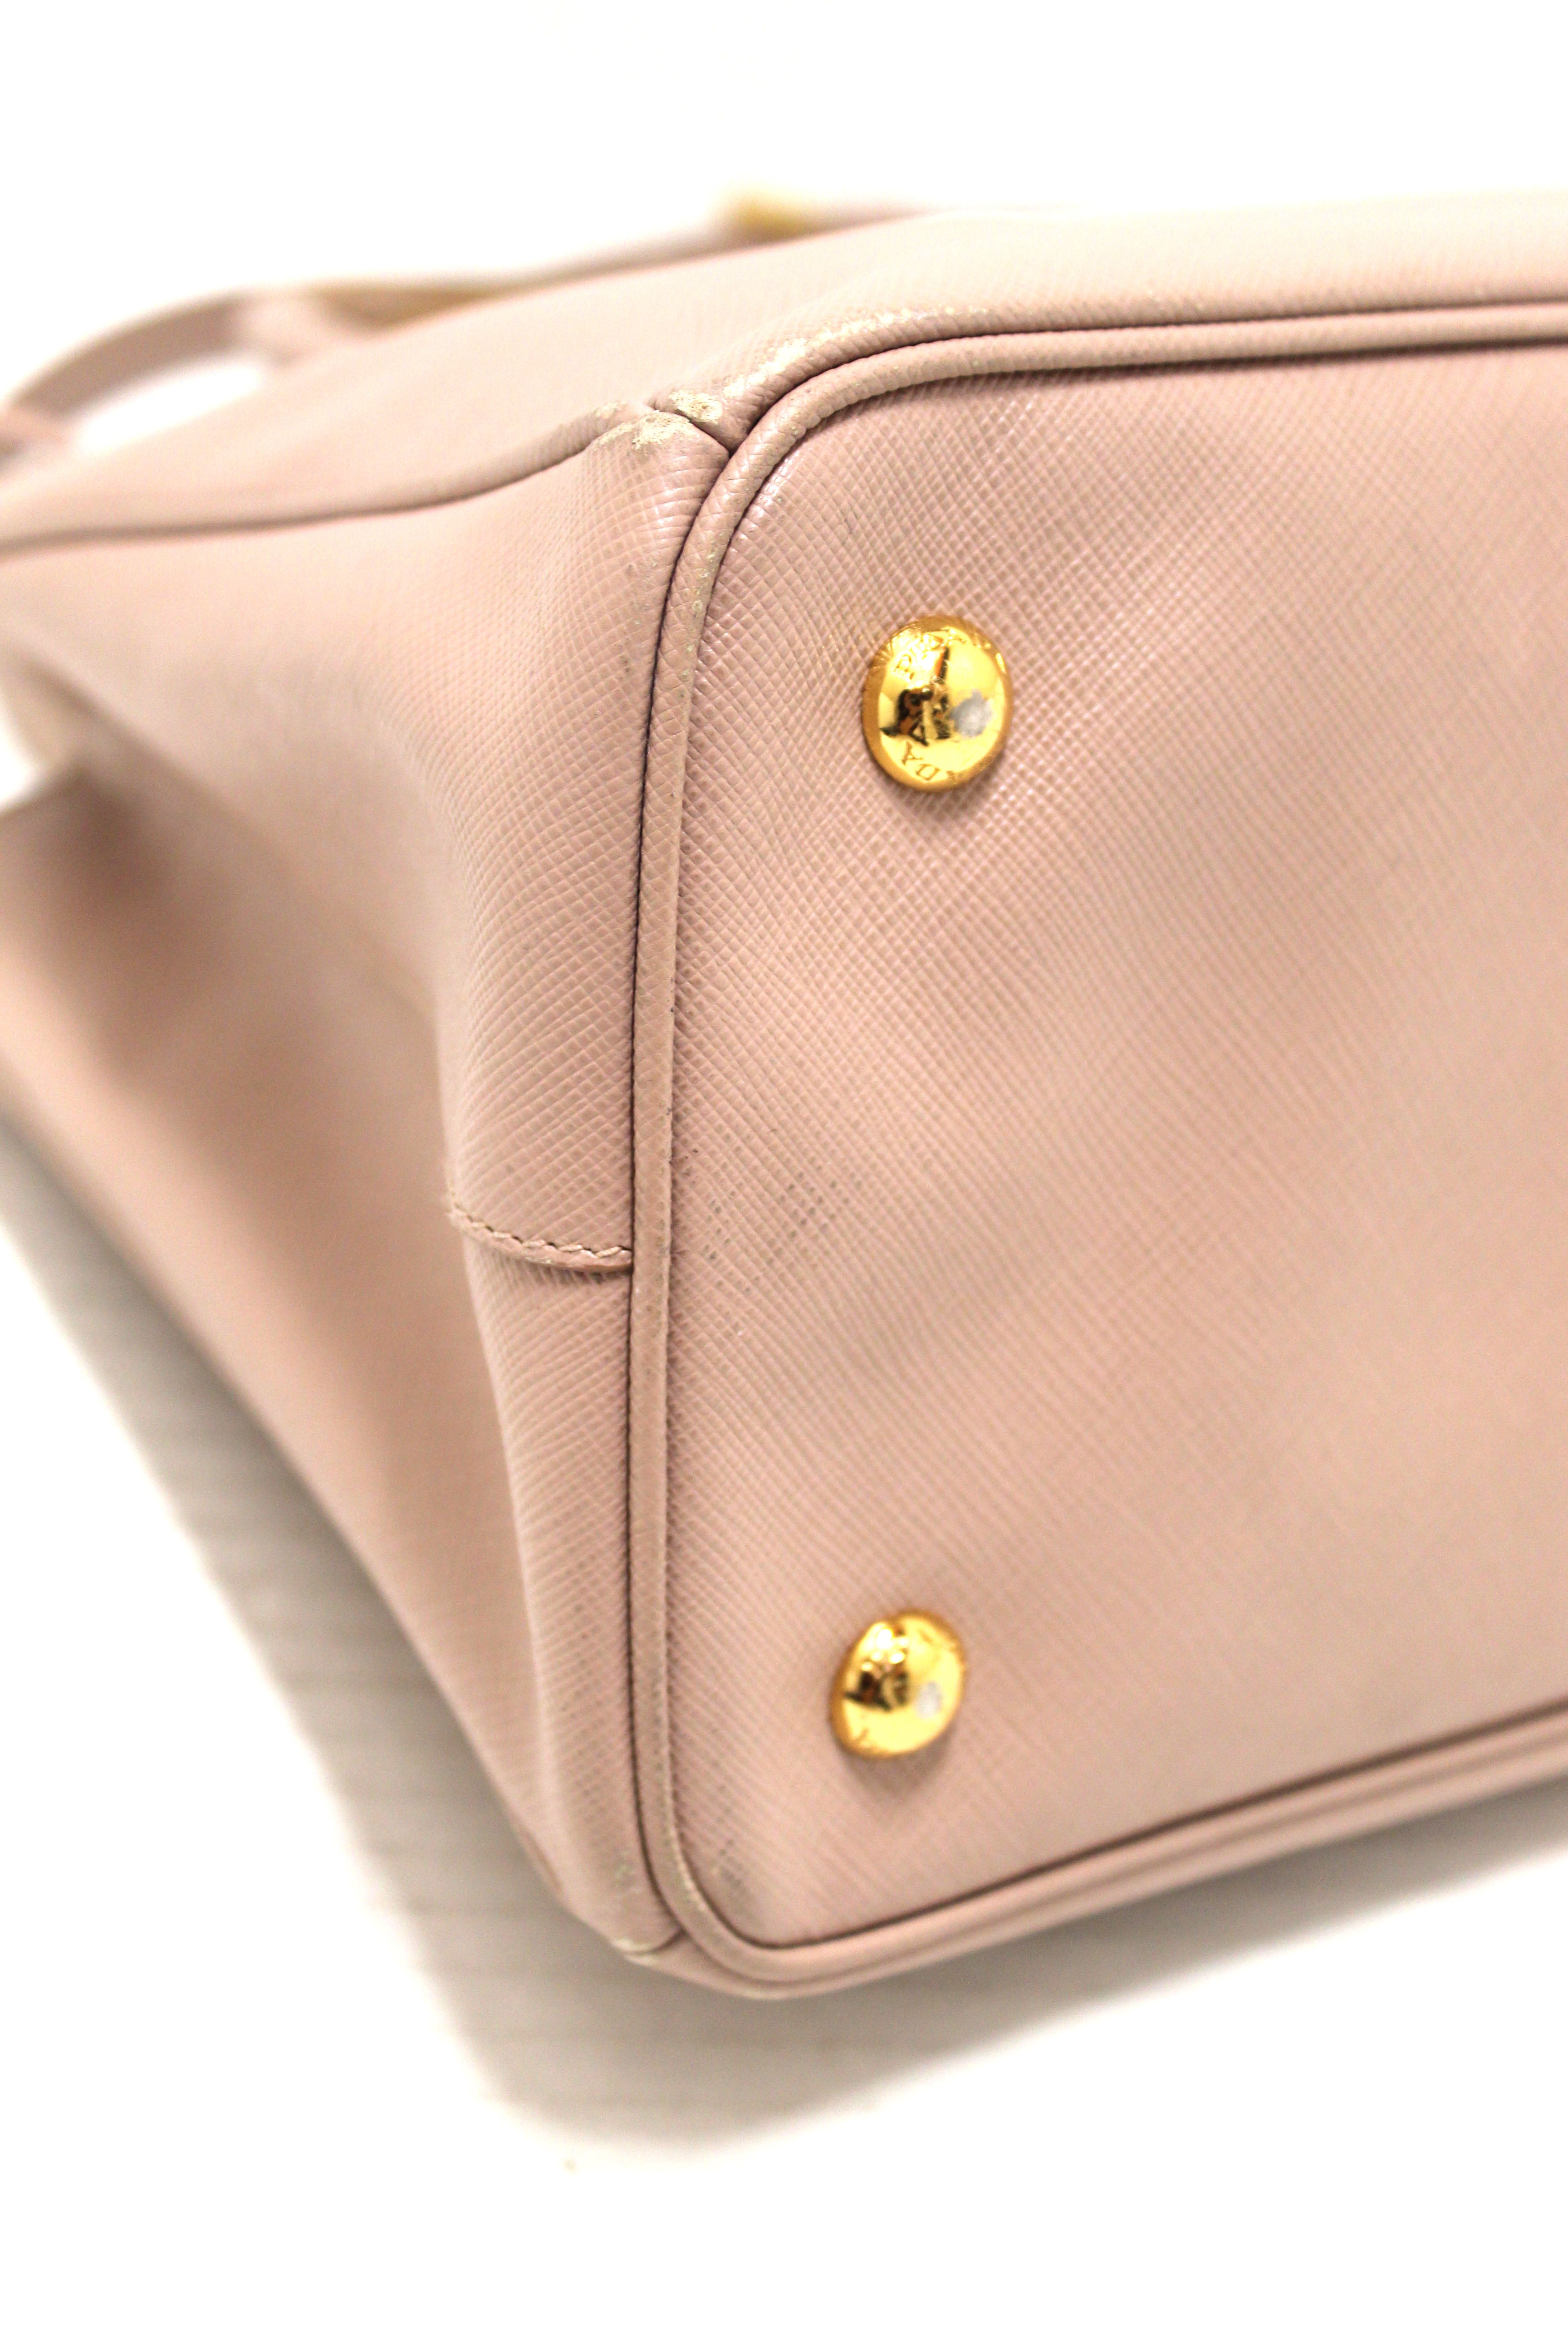 Prada Pink Saffiano Lux Leather Small Double Zip Tote